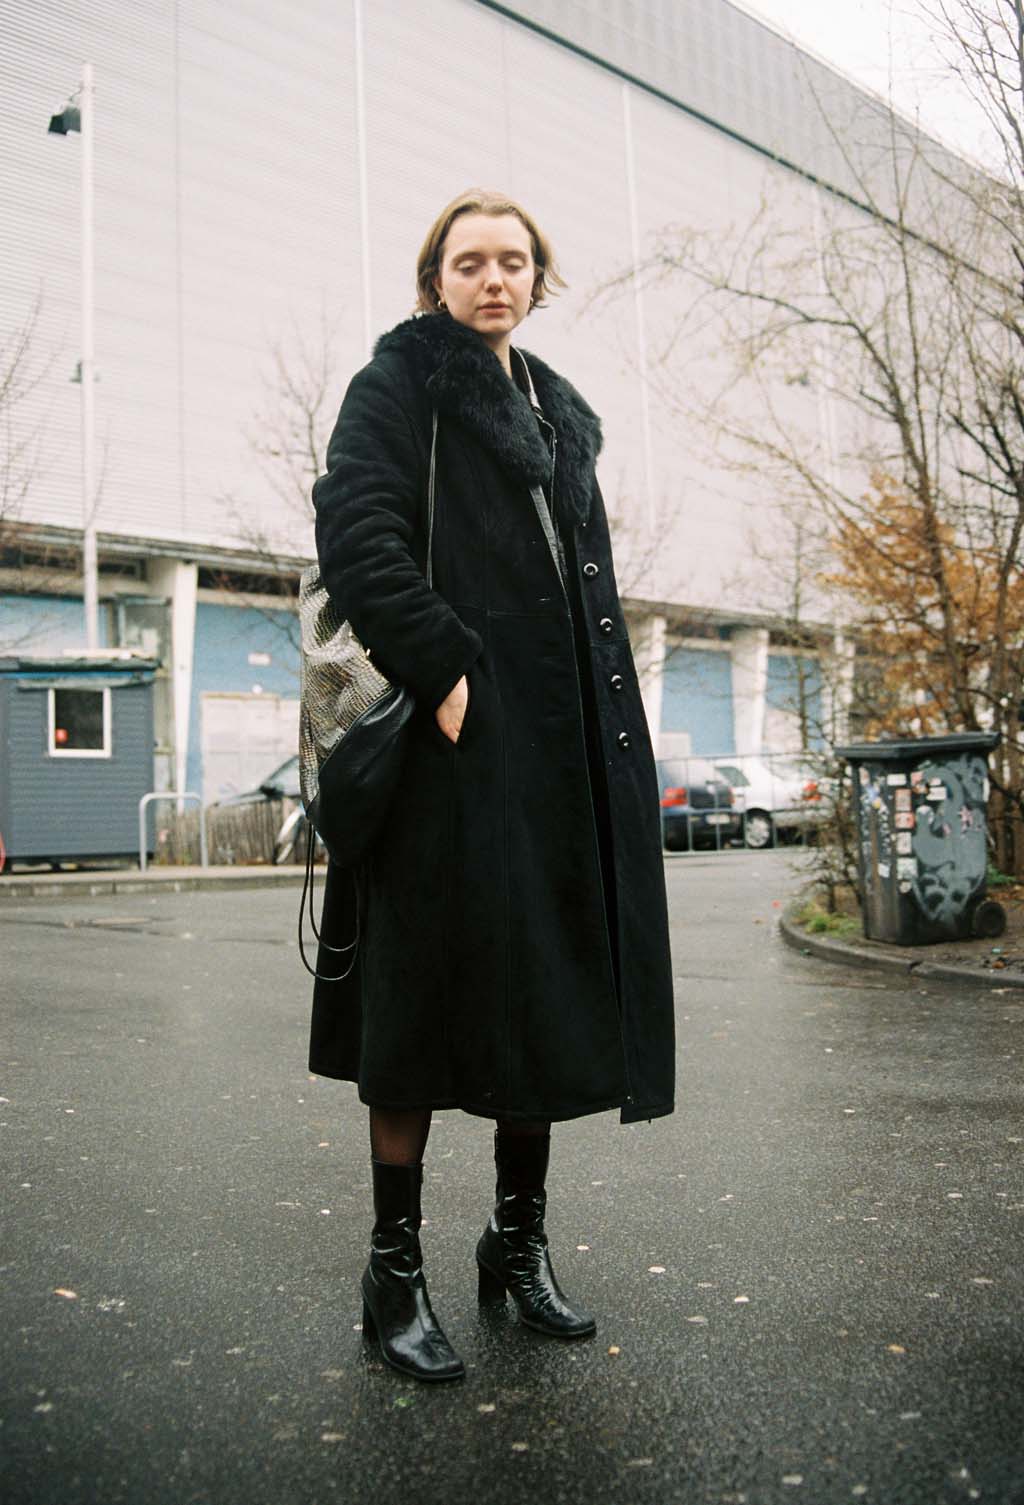 Nacht Clubs Berlin femme au long manteau noir